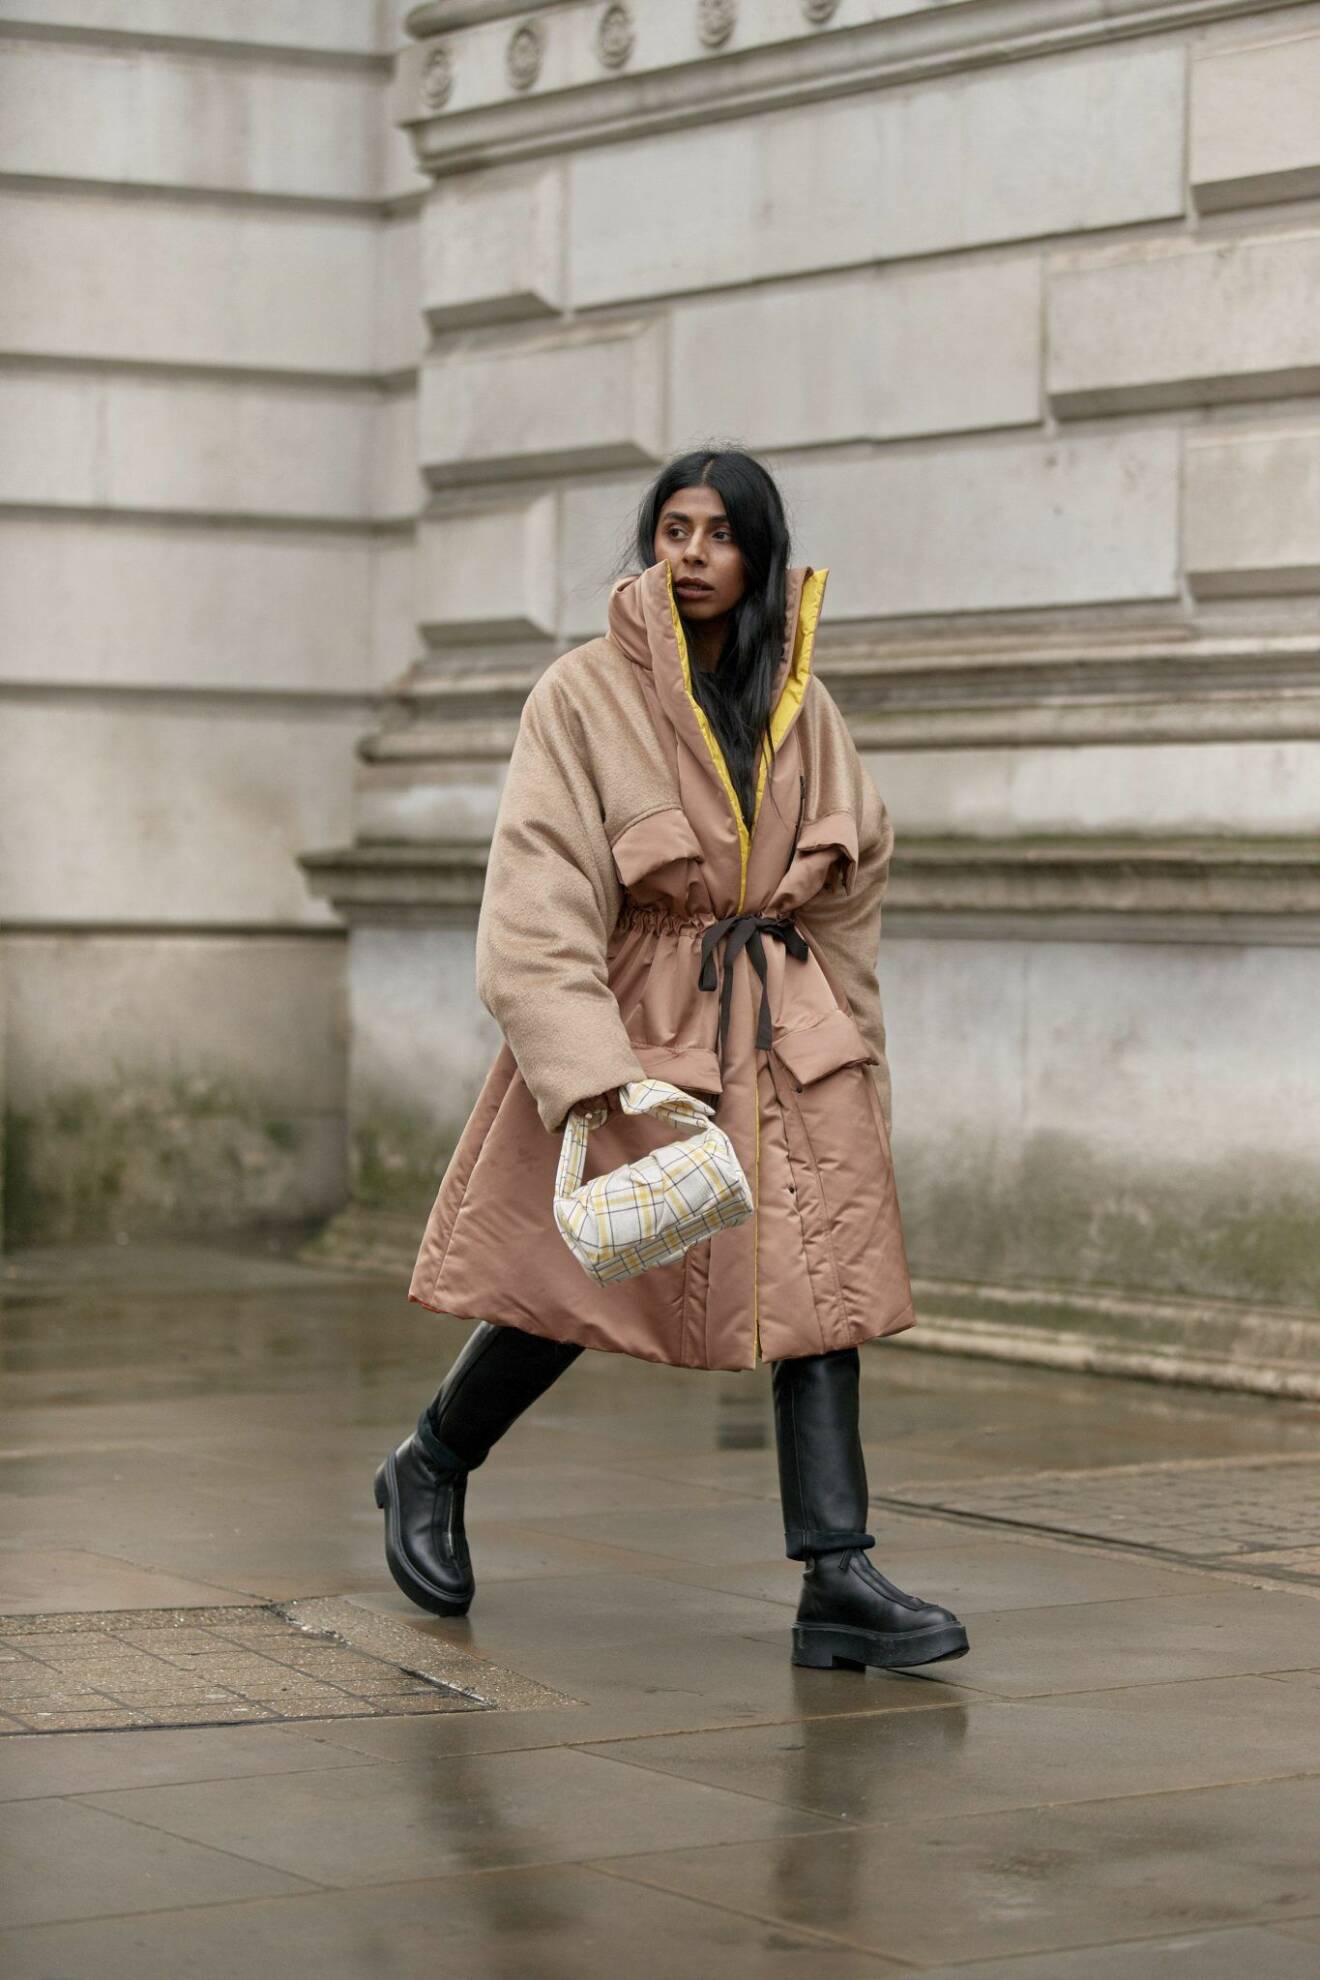 Streetstyle från London Fashion week, rosa oversized jacka.